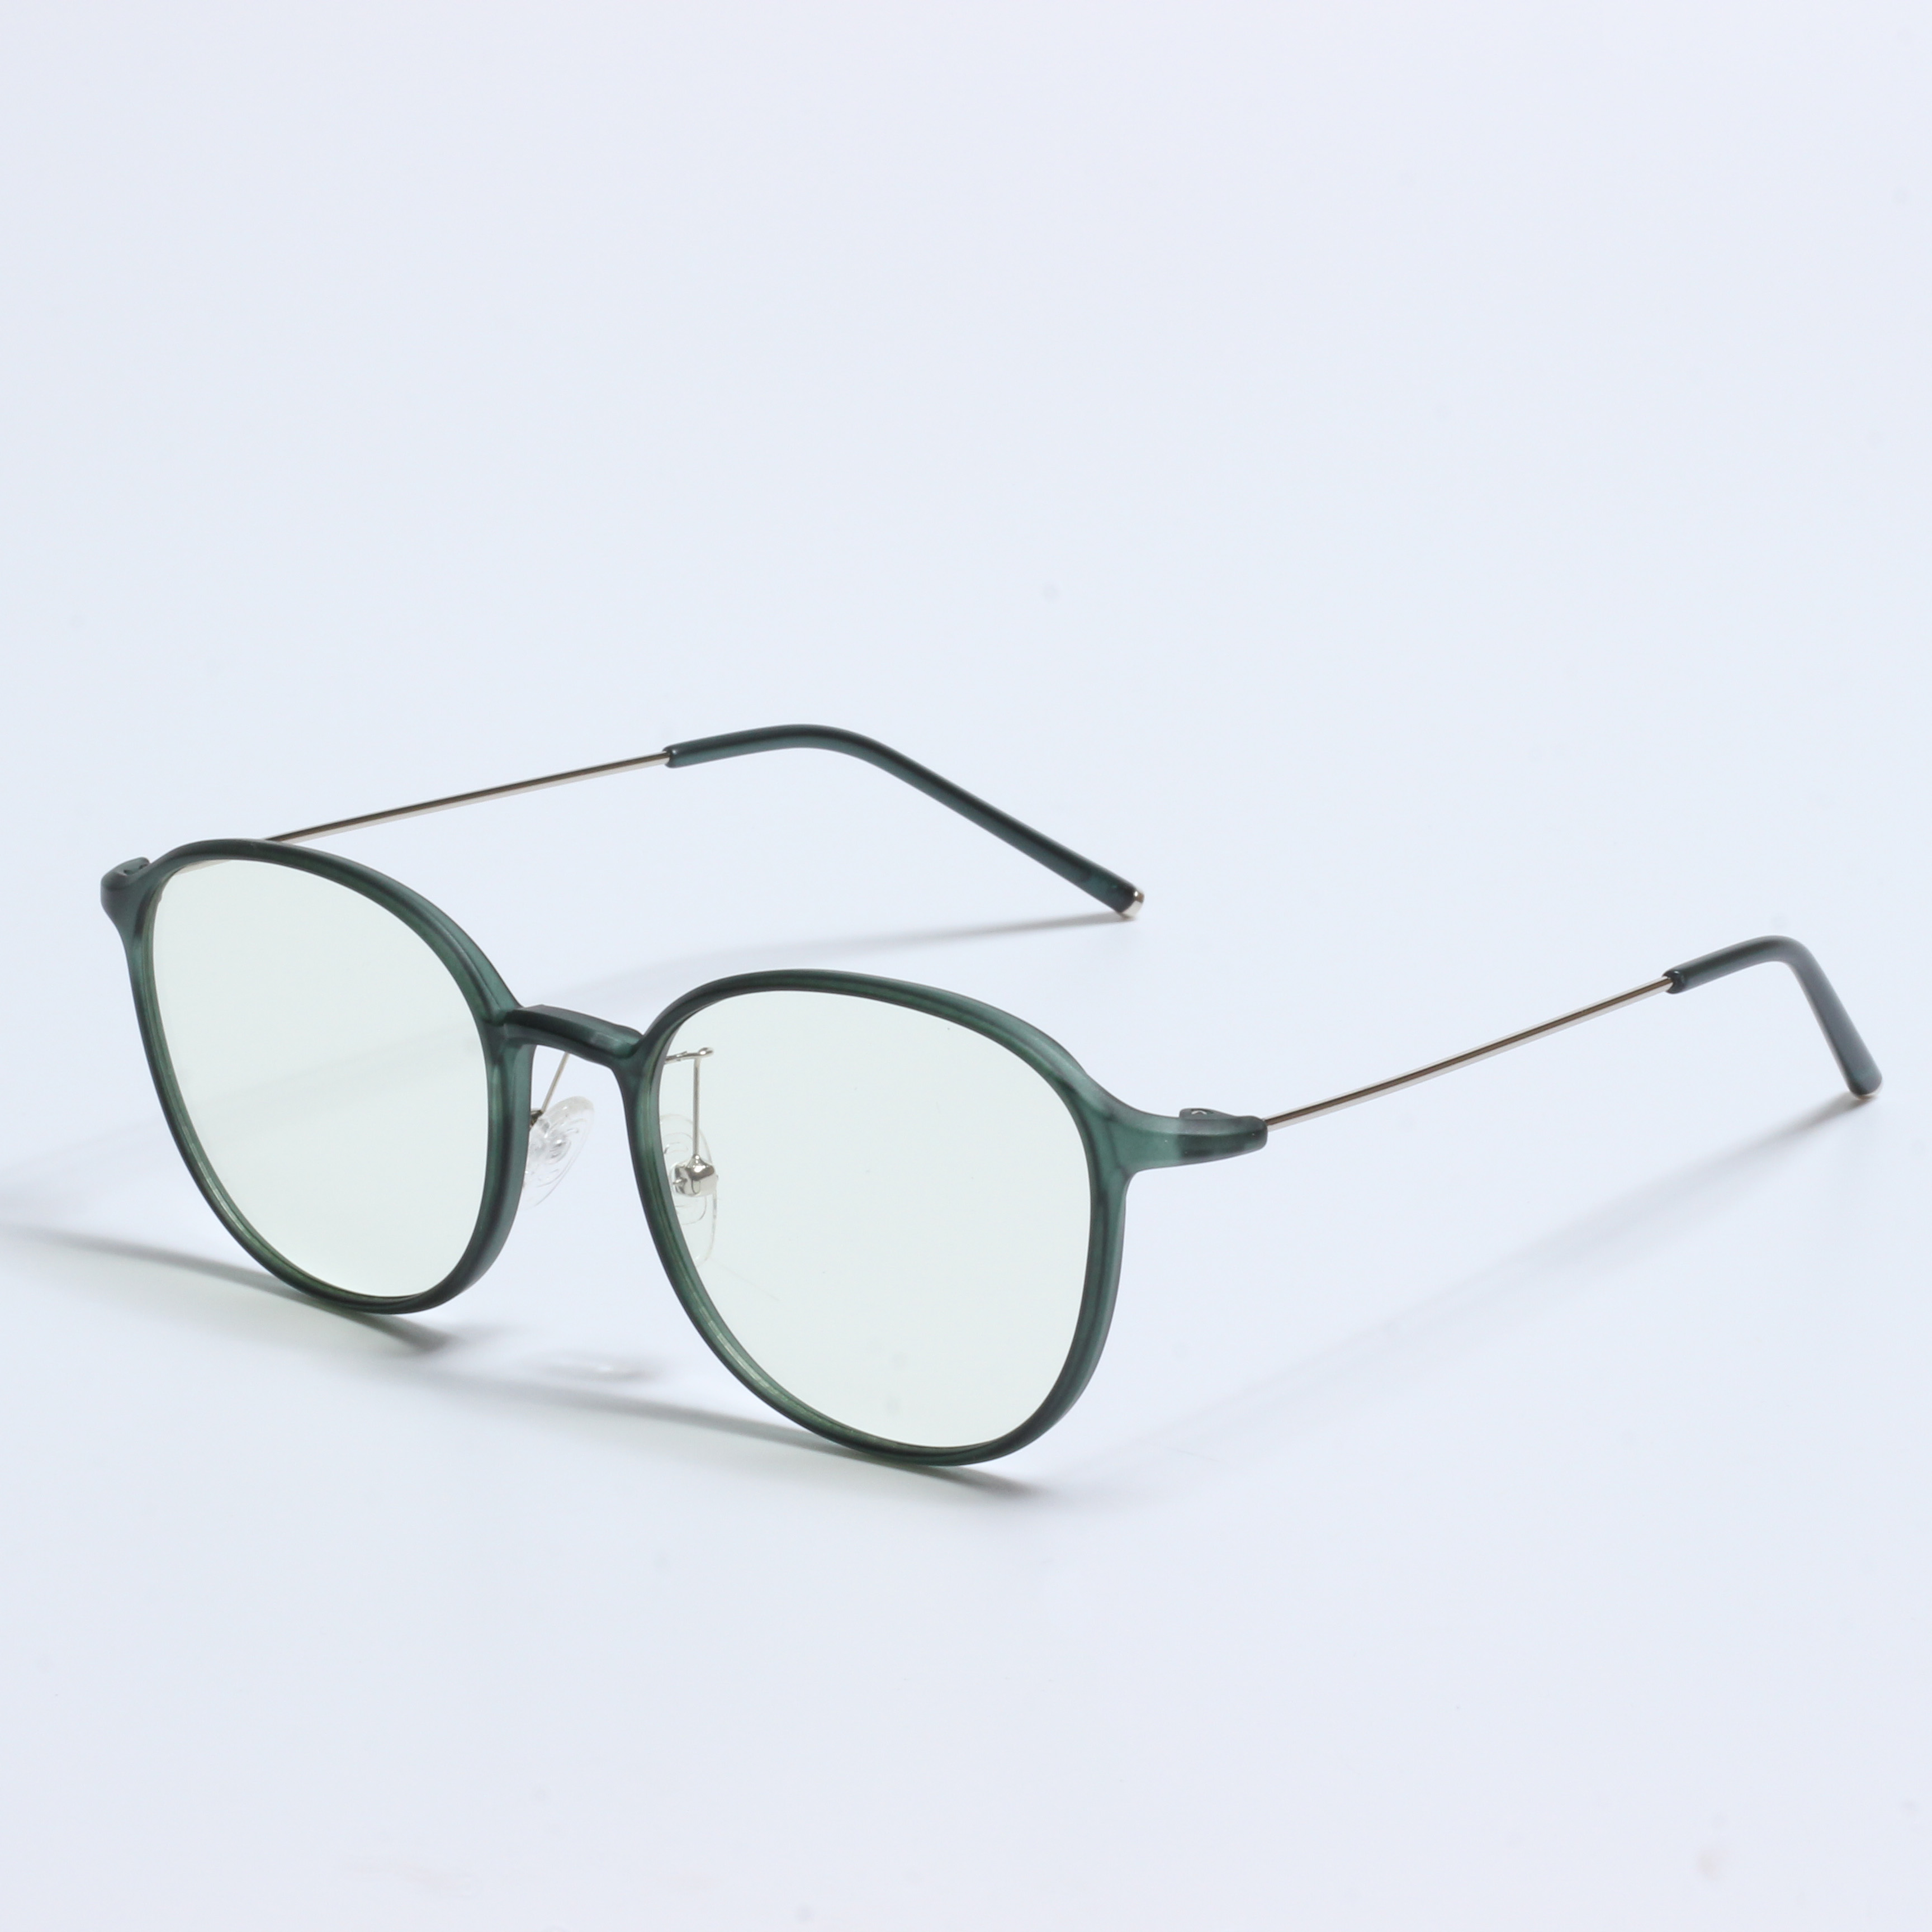 Veleprodaja Tr90 optičkih naočala (11)